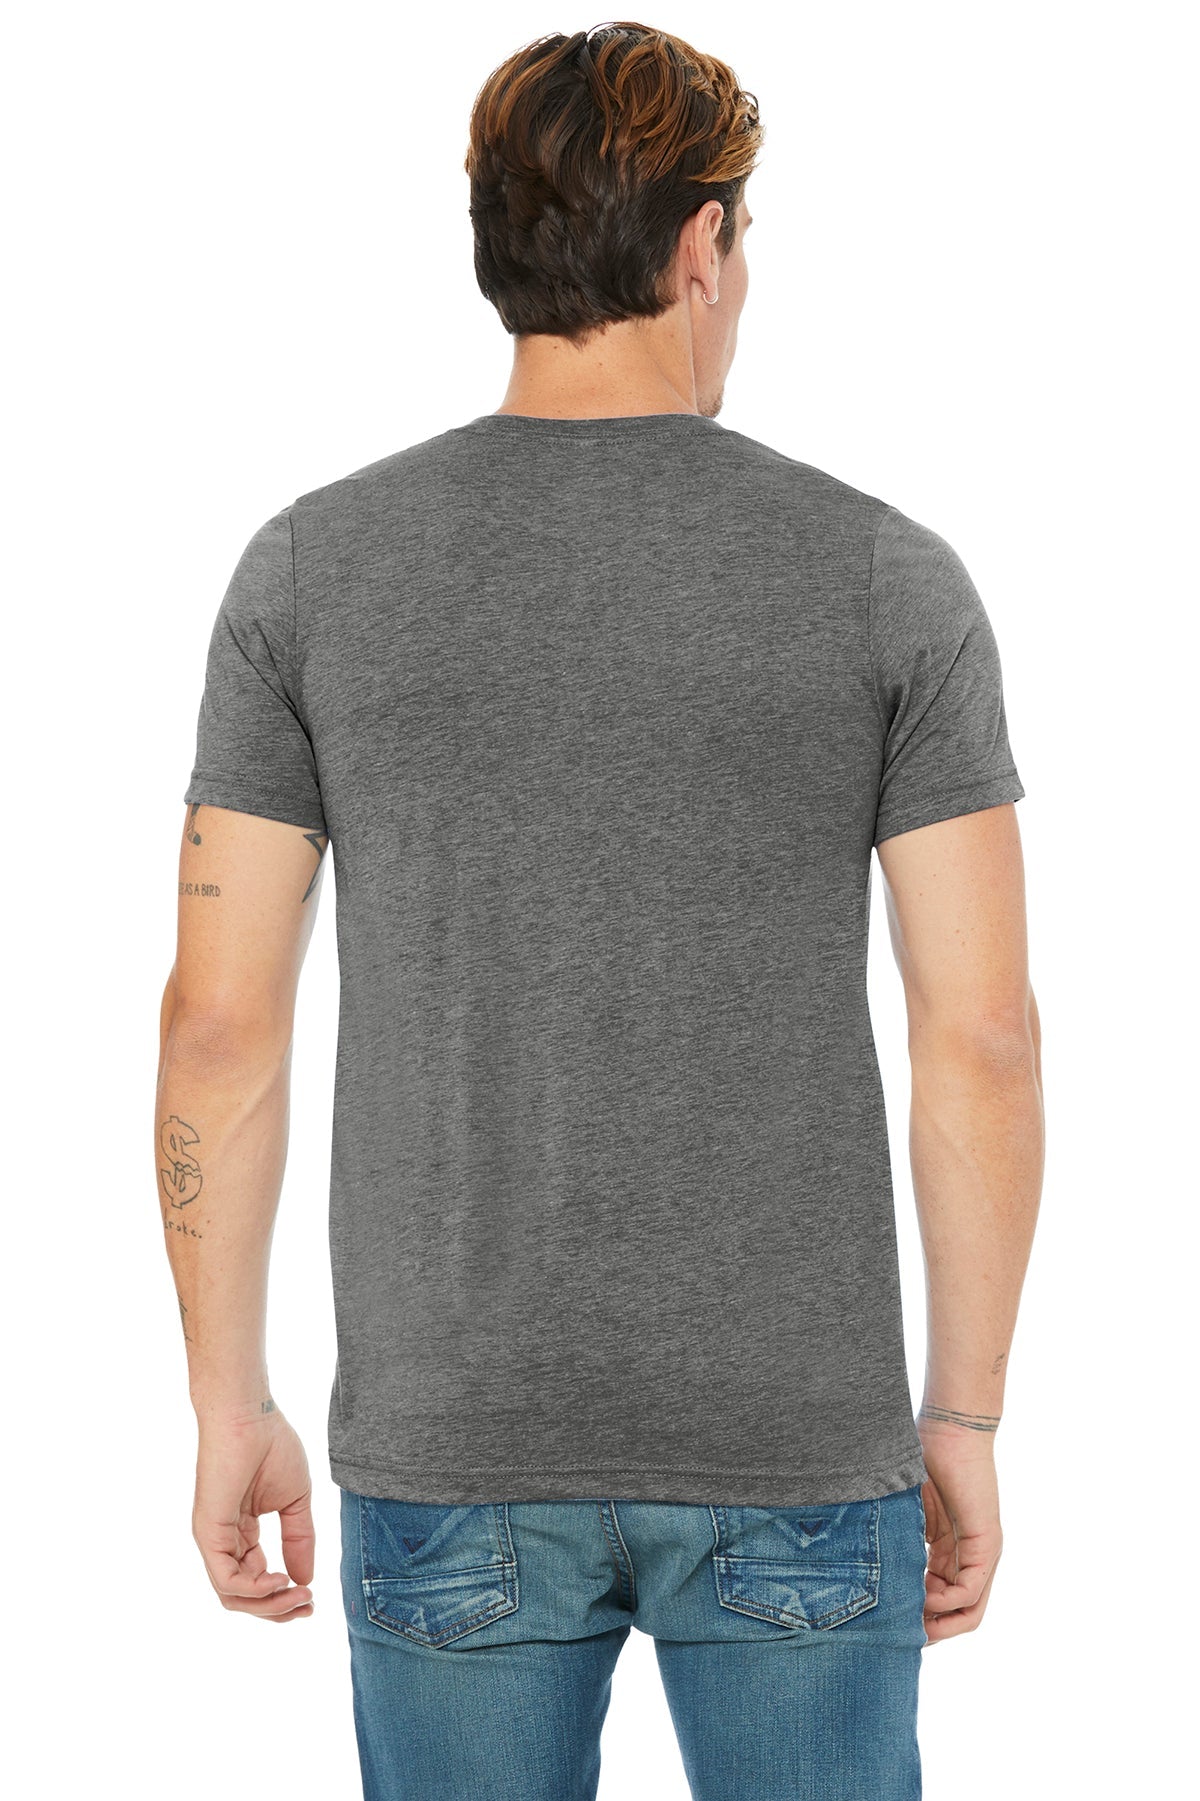 bella + canvas unisex triblend short sleeve v-neck t-shirt 3415c grey triblend